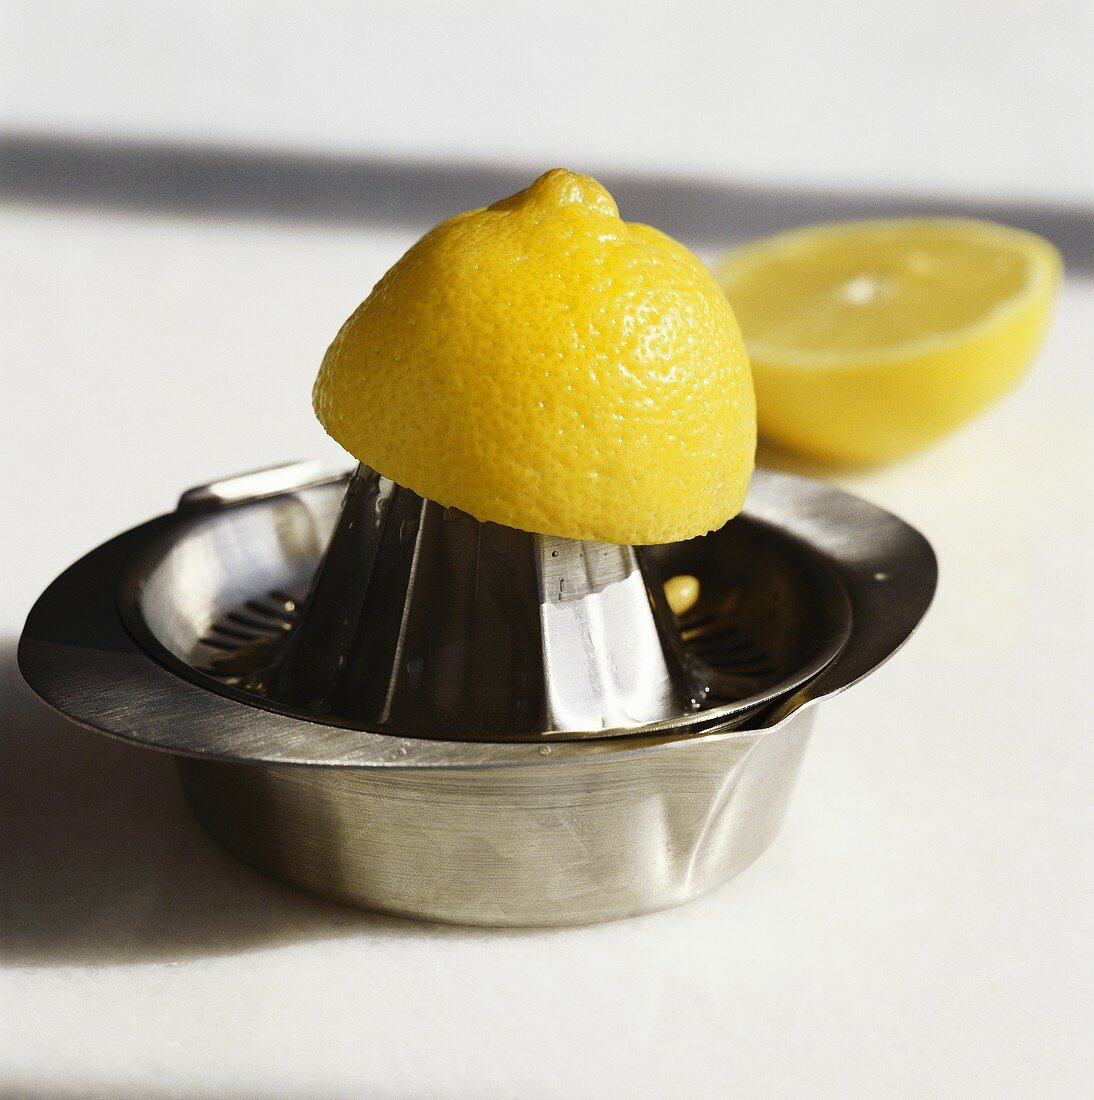 Lemon half on lemon squeezer